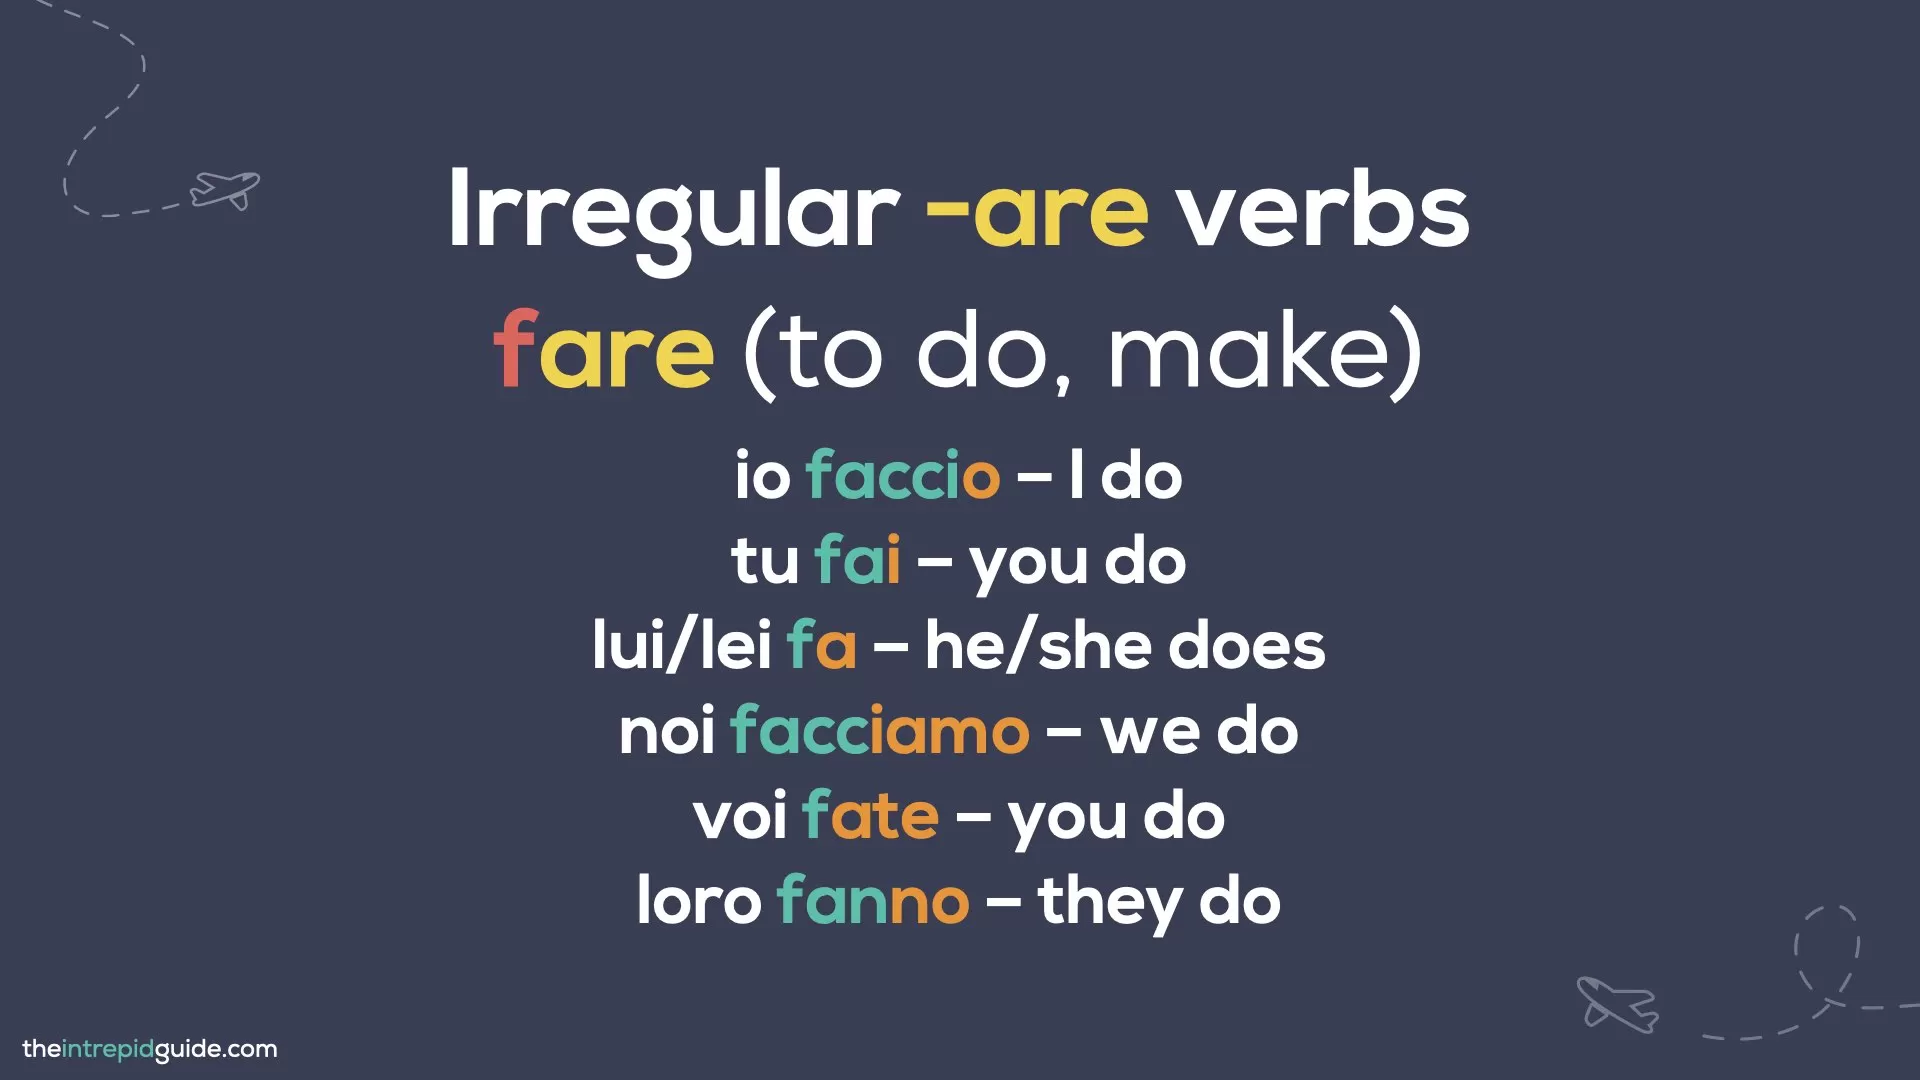 How to Conjugate Italian Verbs - Conjugating the verb fare - to do, make